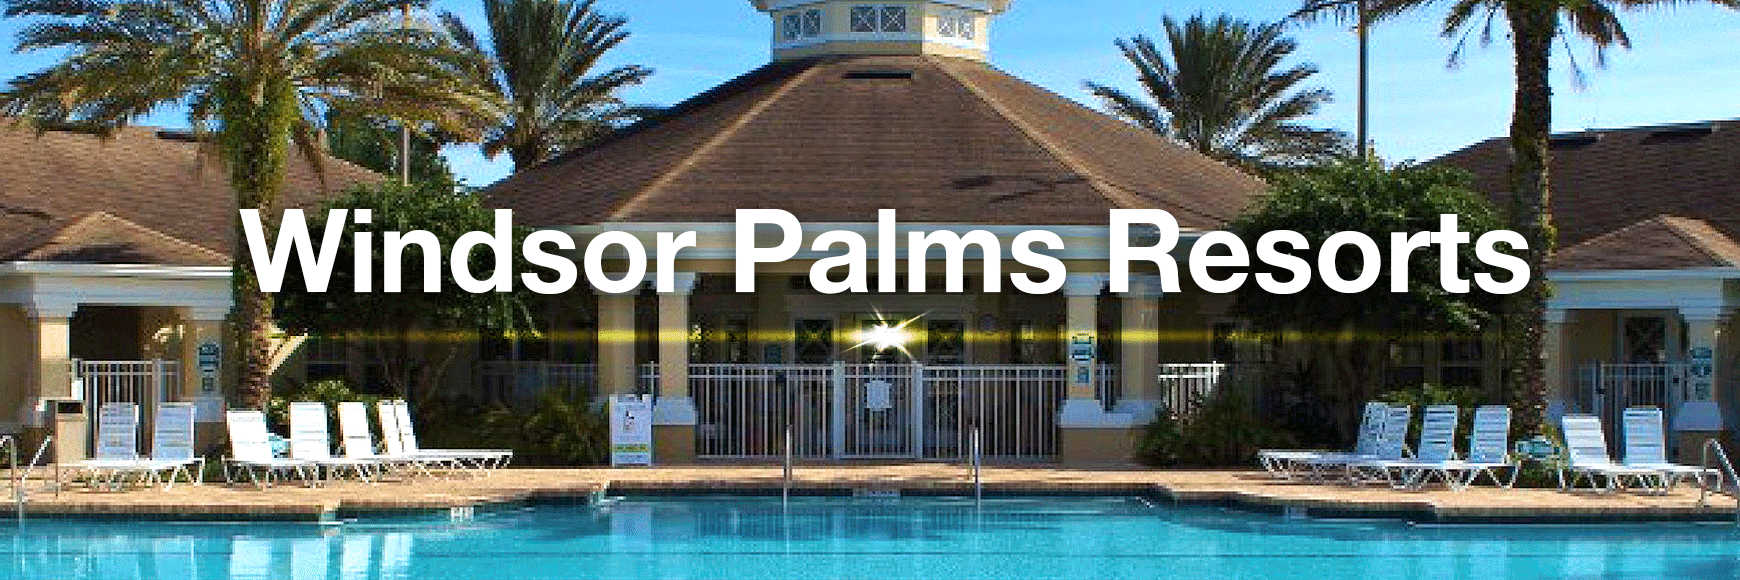 9 Reasons to Stay at Windsor Palms Resorts - Orlando vacation